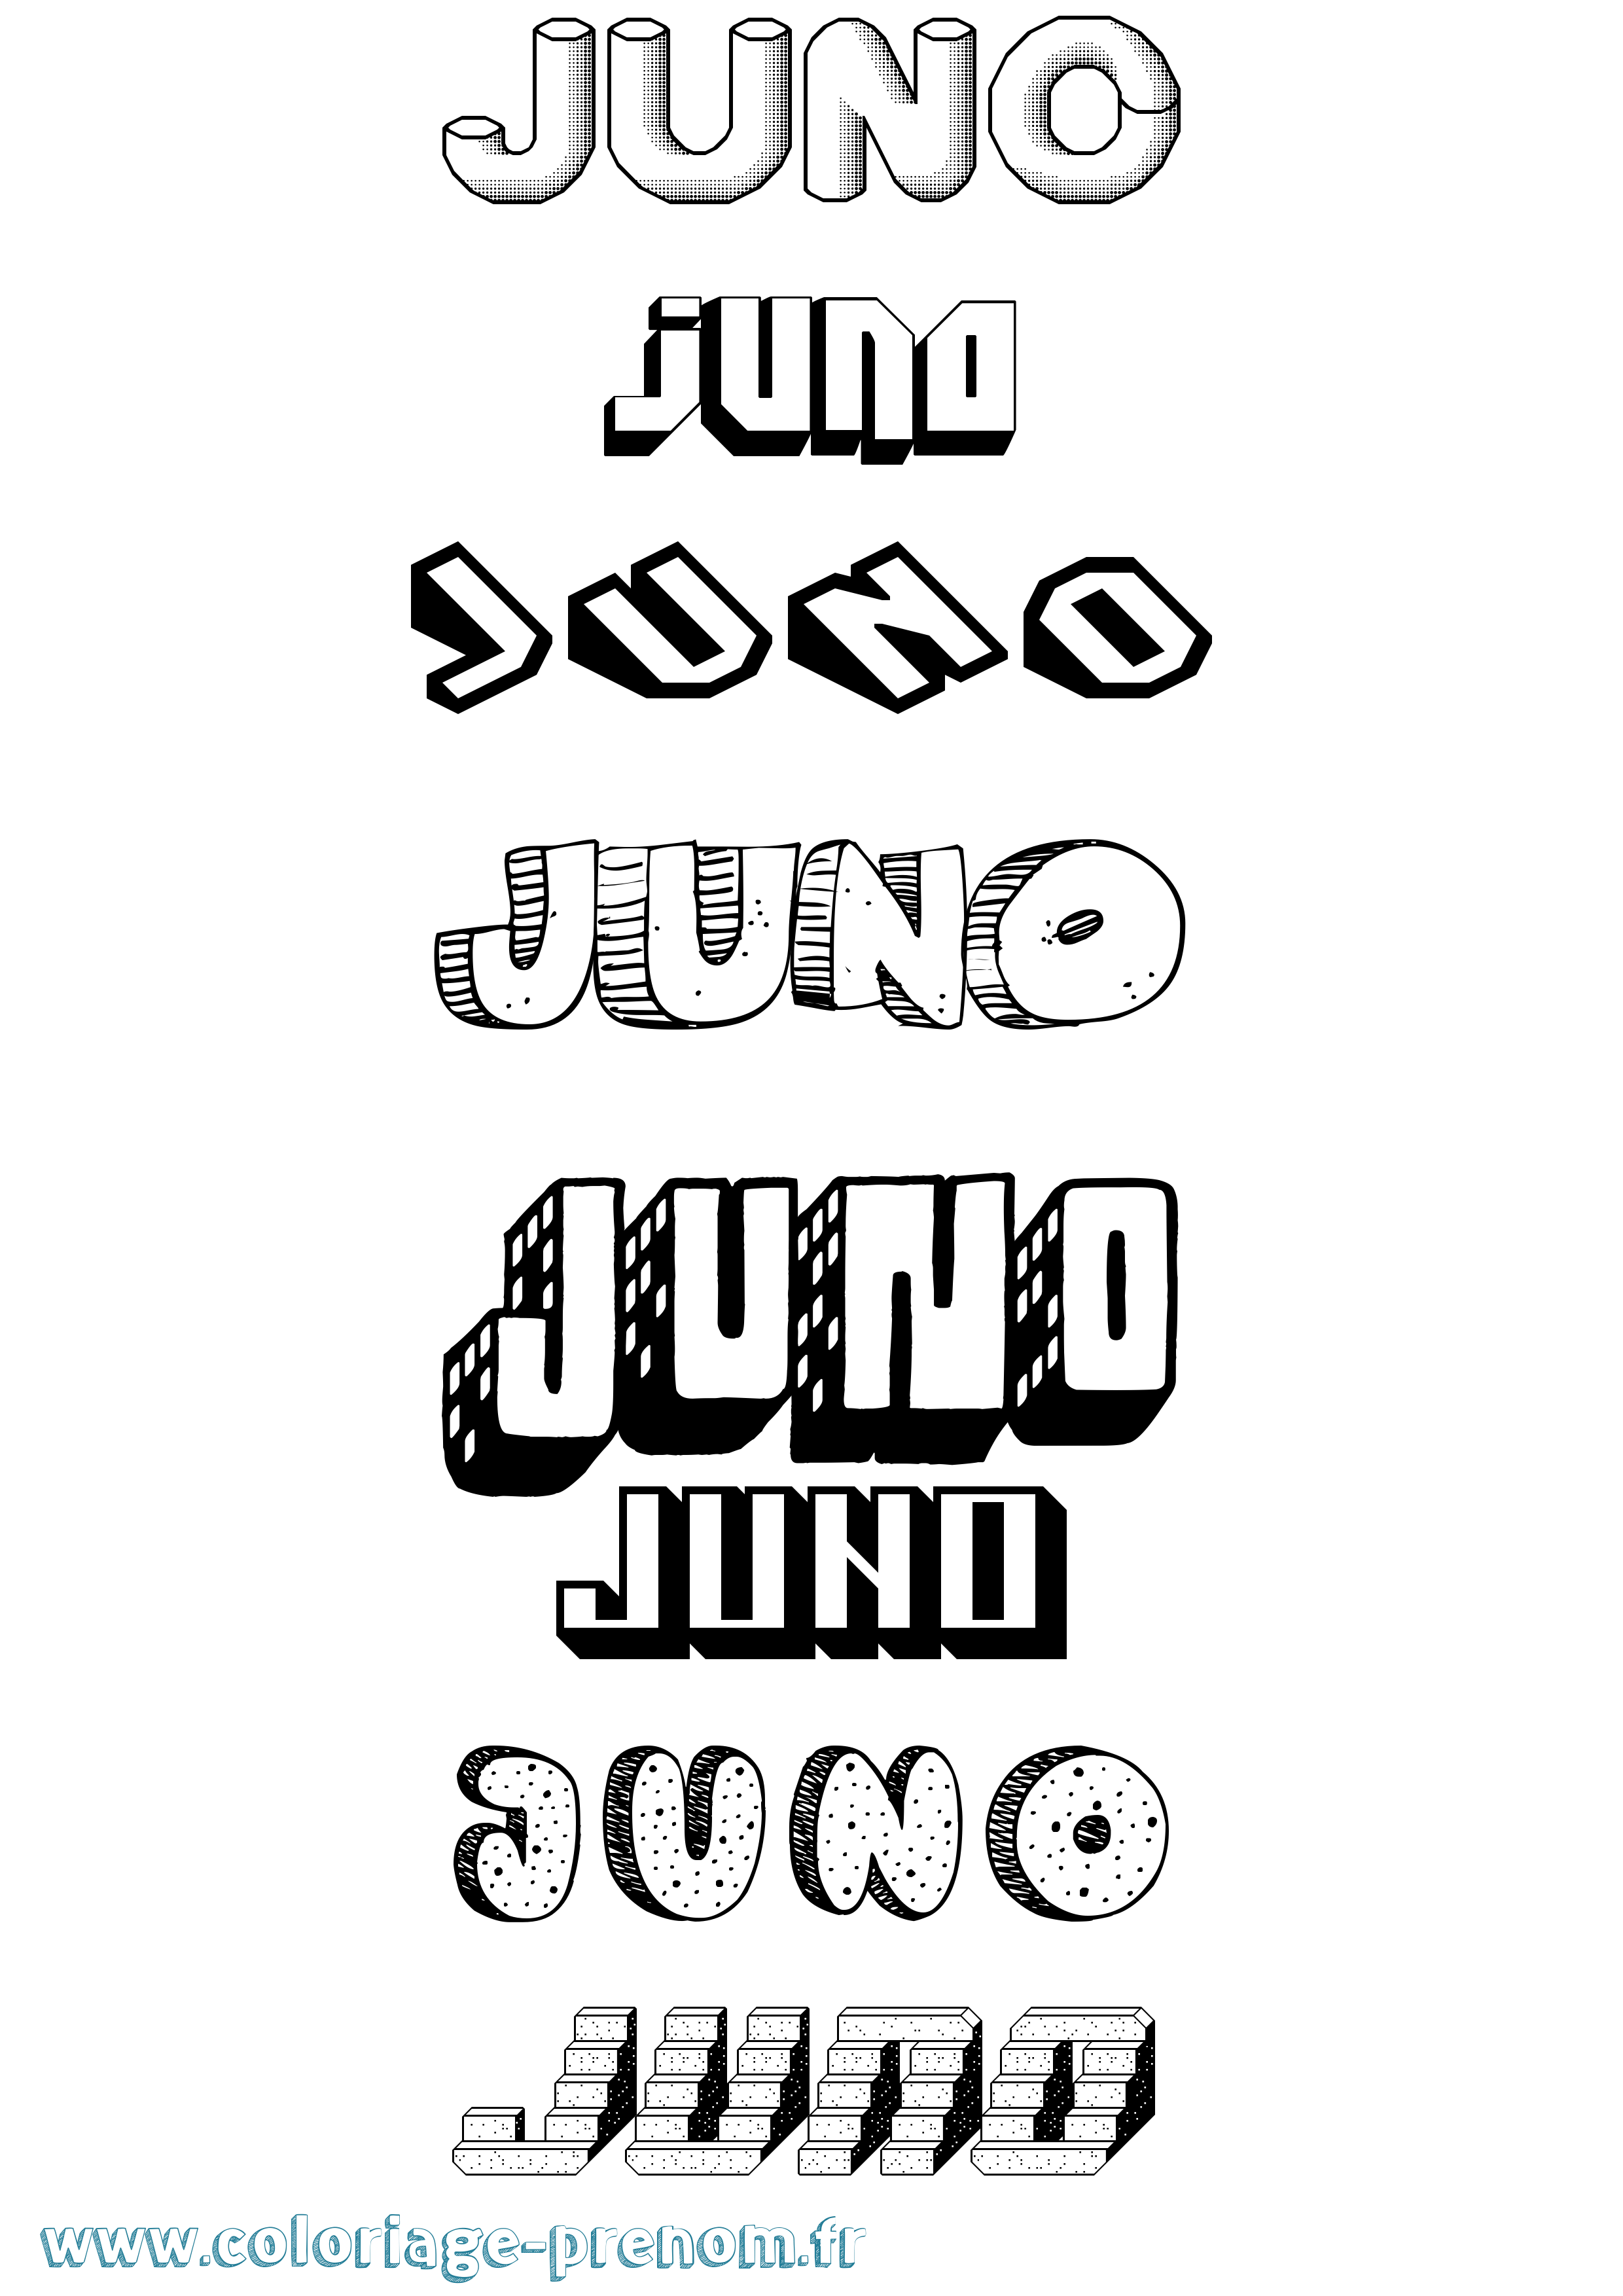 Coloriage prénom Juno Effet 3D